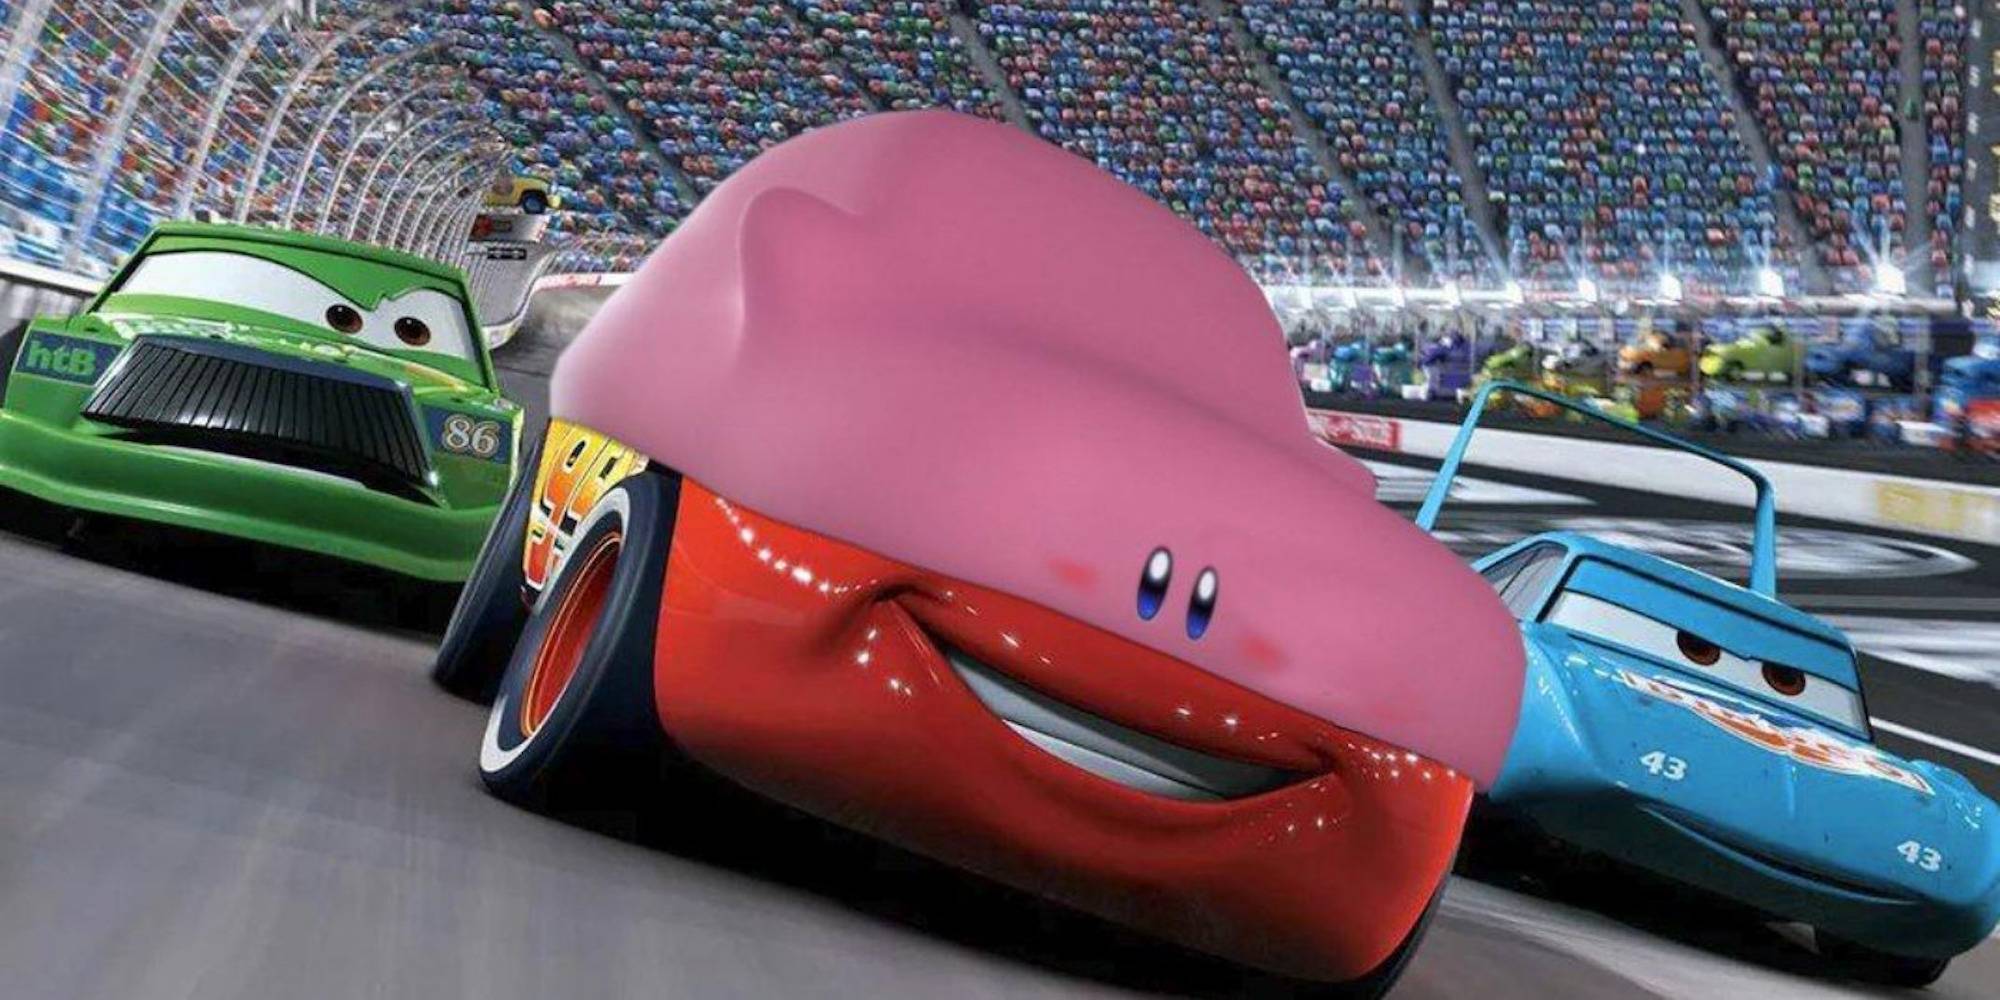 2-A-Kirby-meme-involving-Cars.jpg